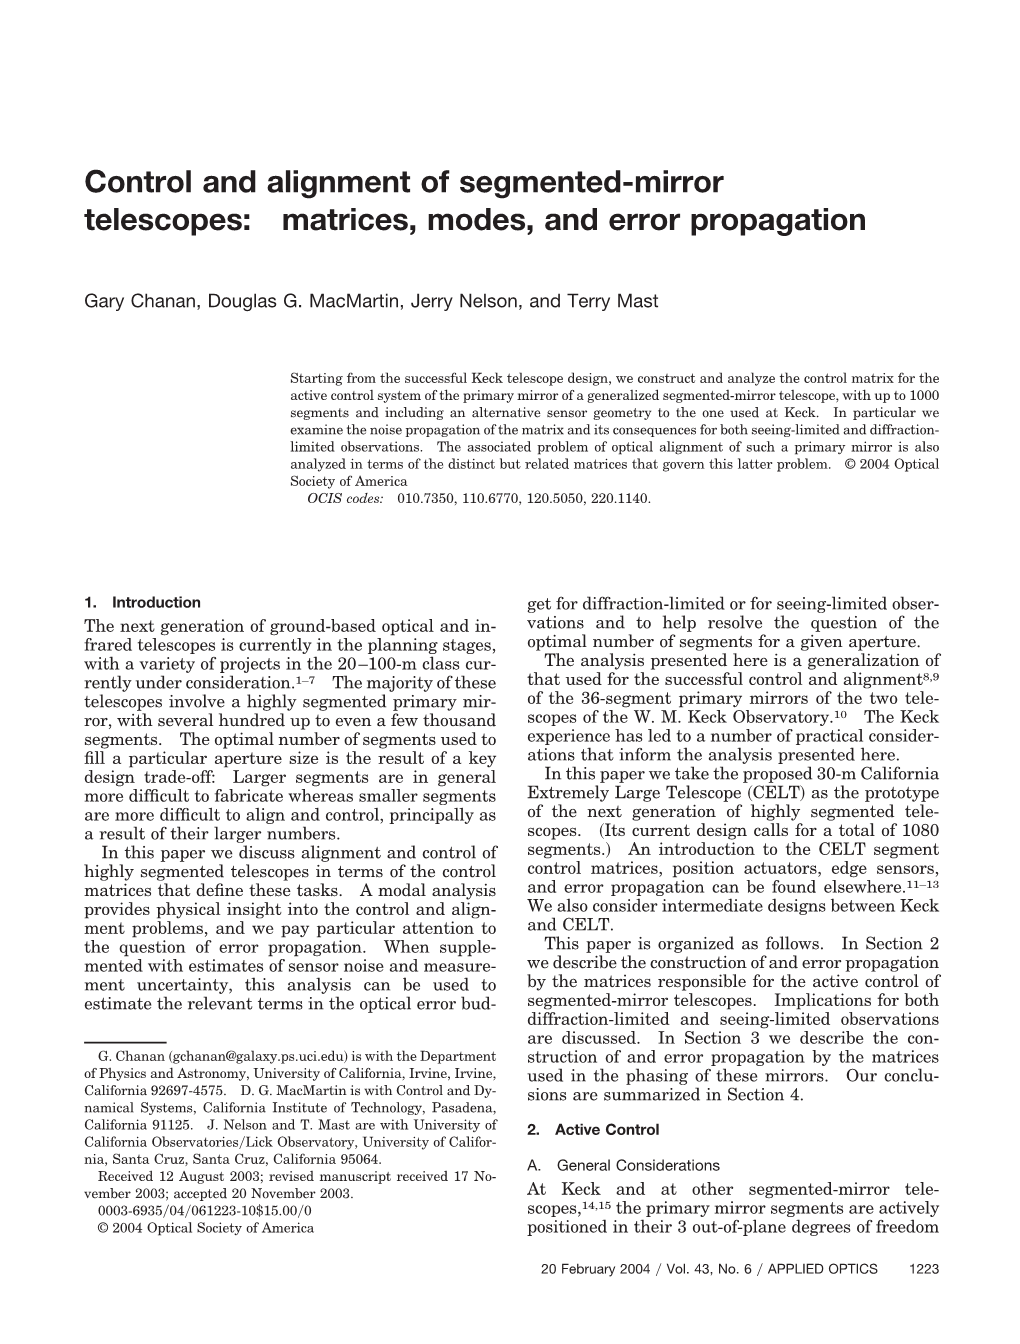 Control and Alignment of Segmented-Mirror Telescopes: Matrices, Modes, and Error Propagation